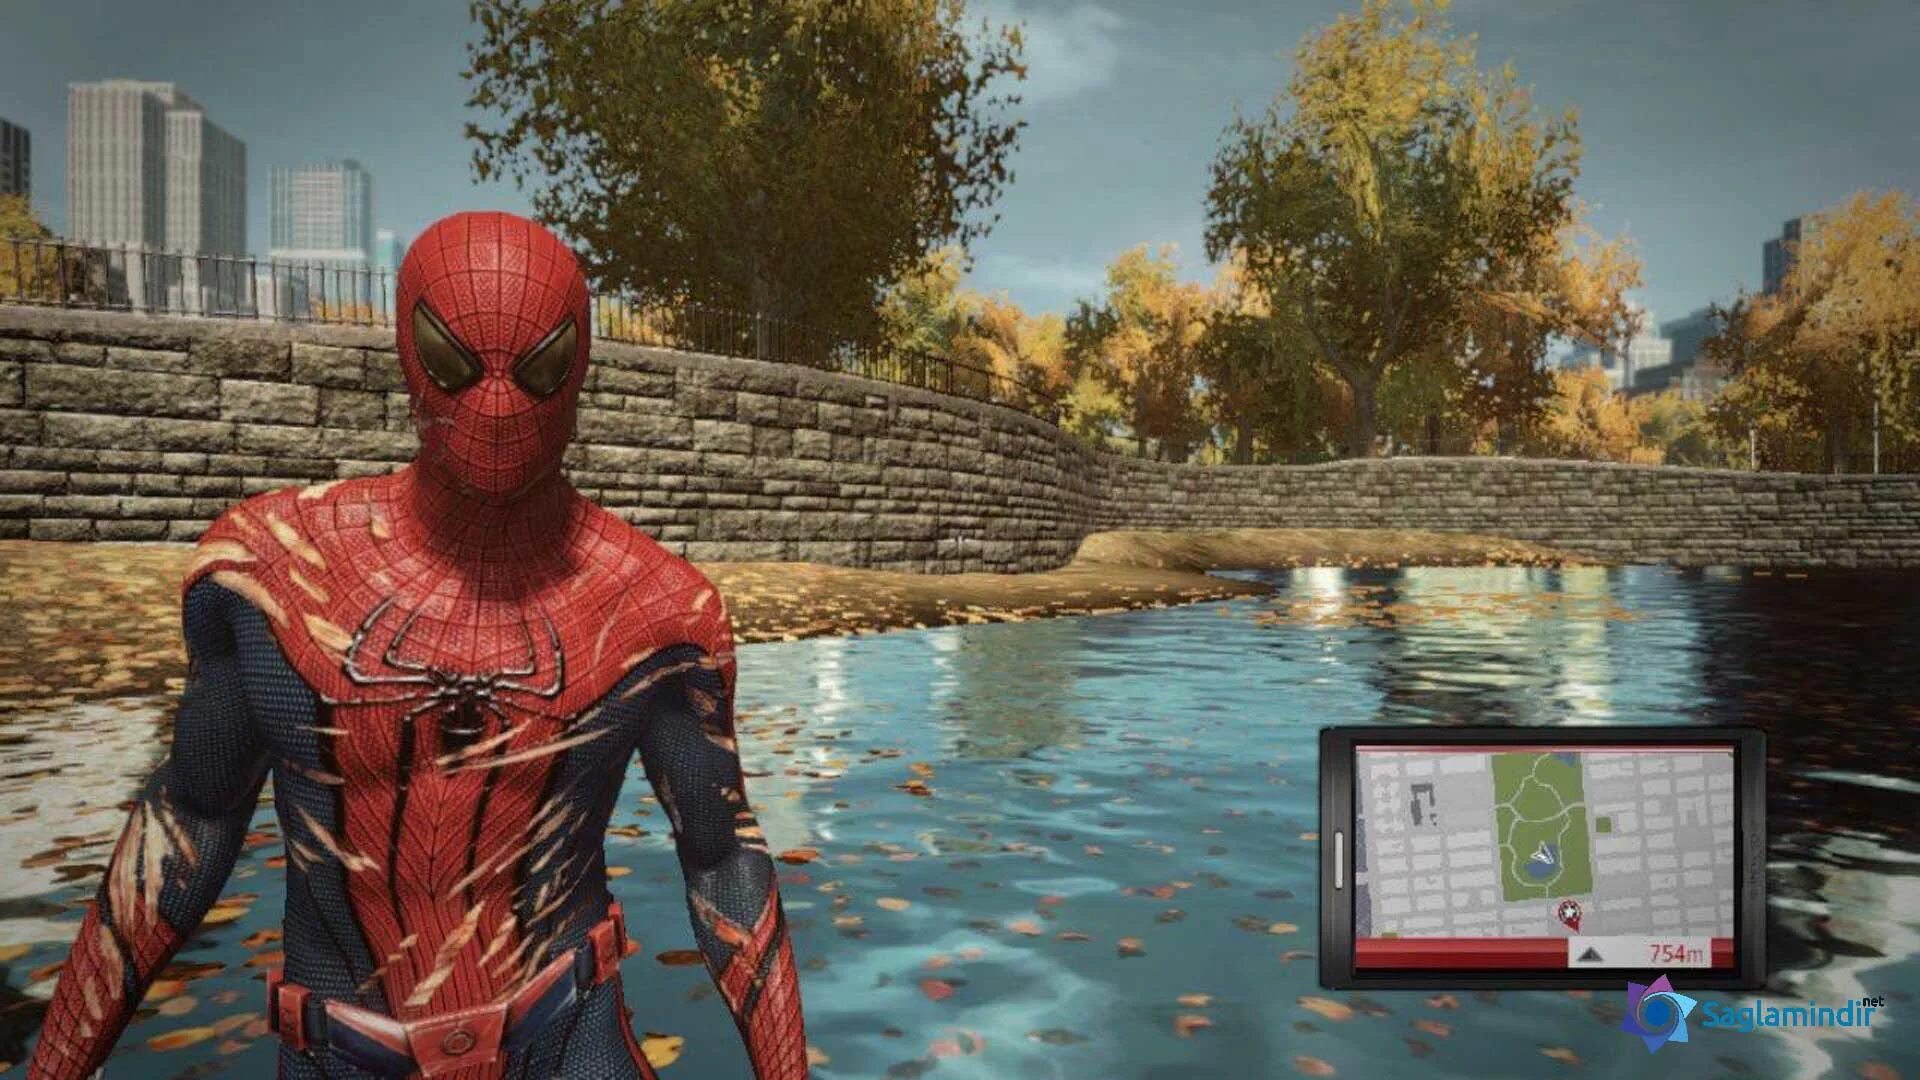 The amazing Spider-man (игра, 2012). Эмейзинг человек паук 1. The amazing Spider-man 2 игра. Амазинг Спайдер Мэн игра. Игра человека паука крутая